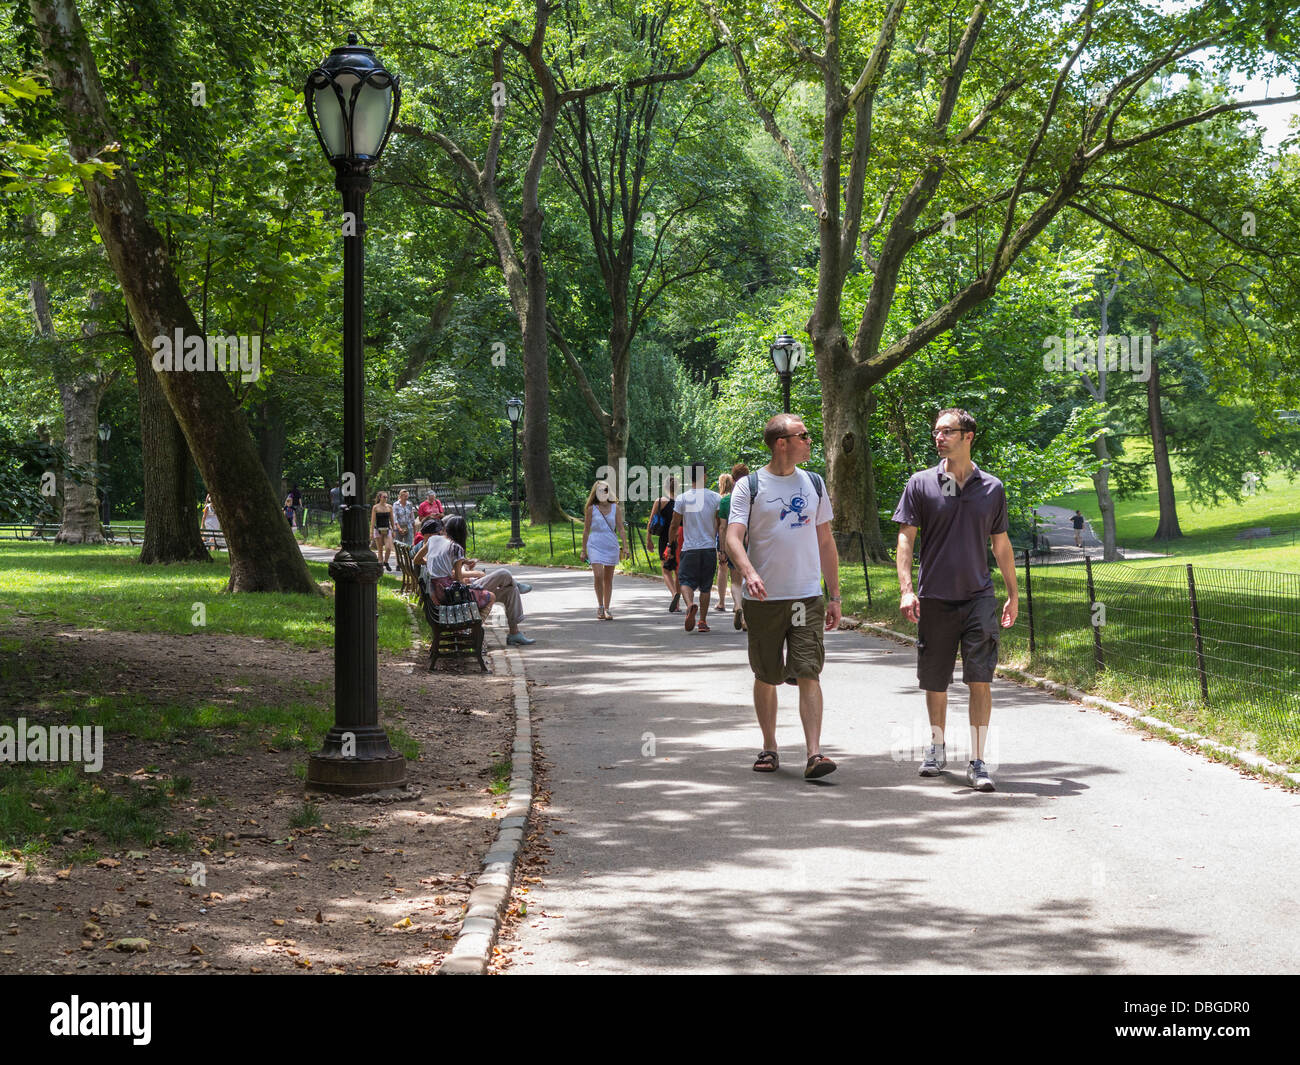 people walking in the park